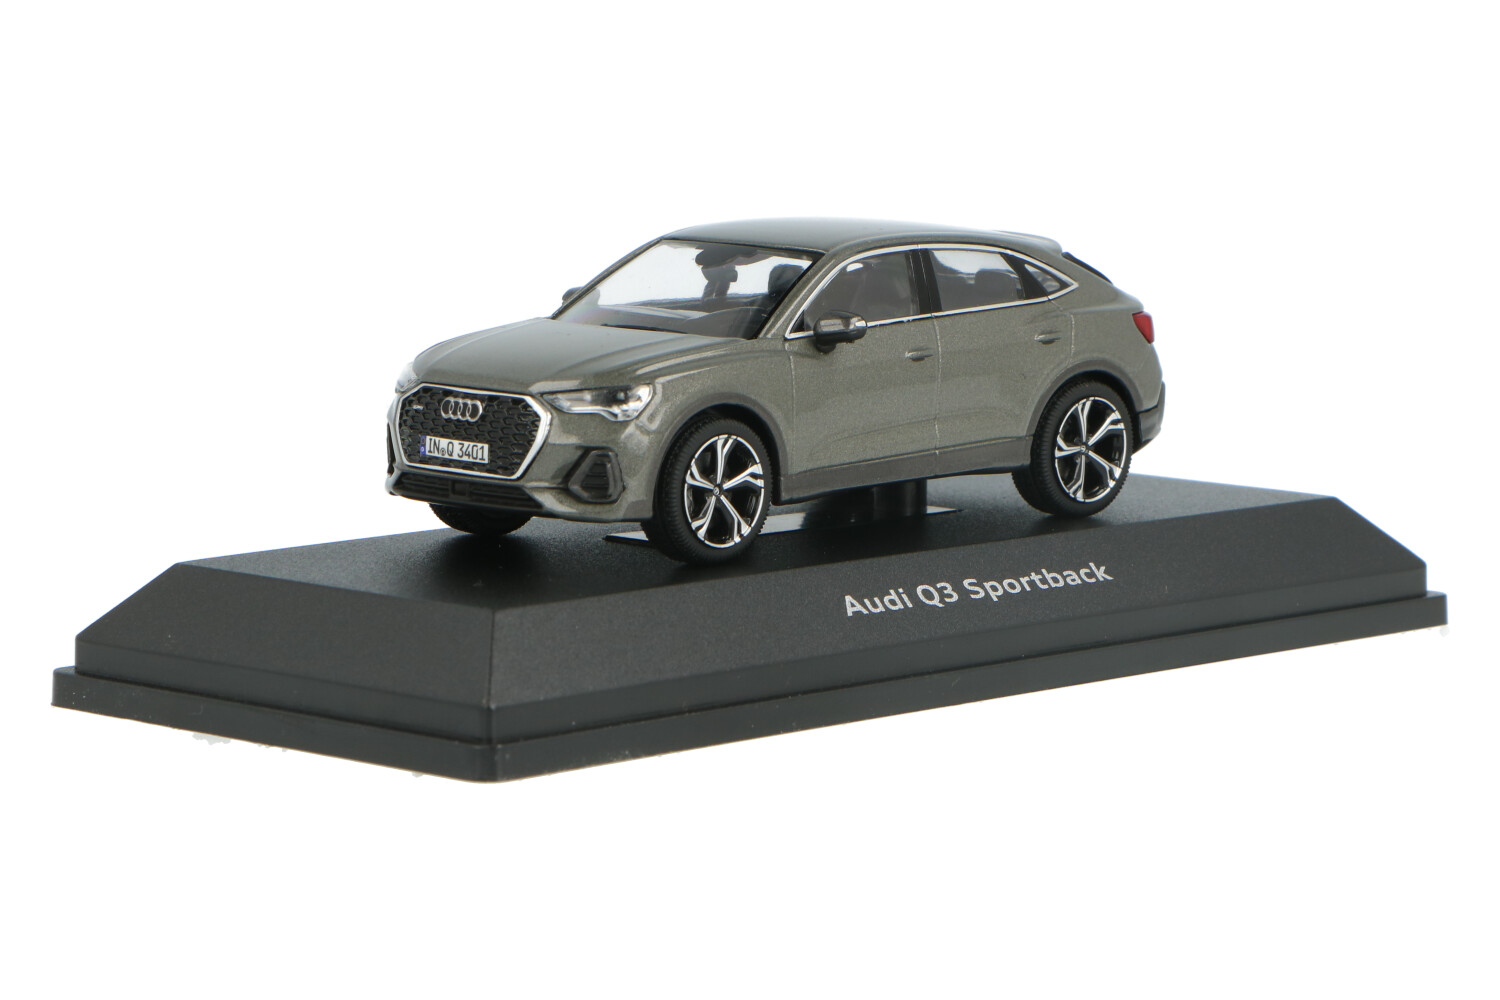 7 cm Model Toy Car Diecast Die Cast Miniature Grey Silver AUDI Q3 1:64 